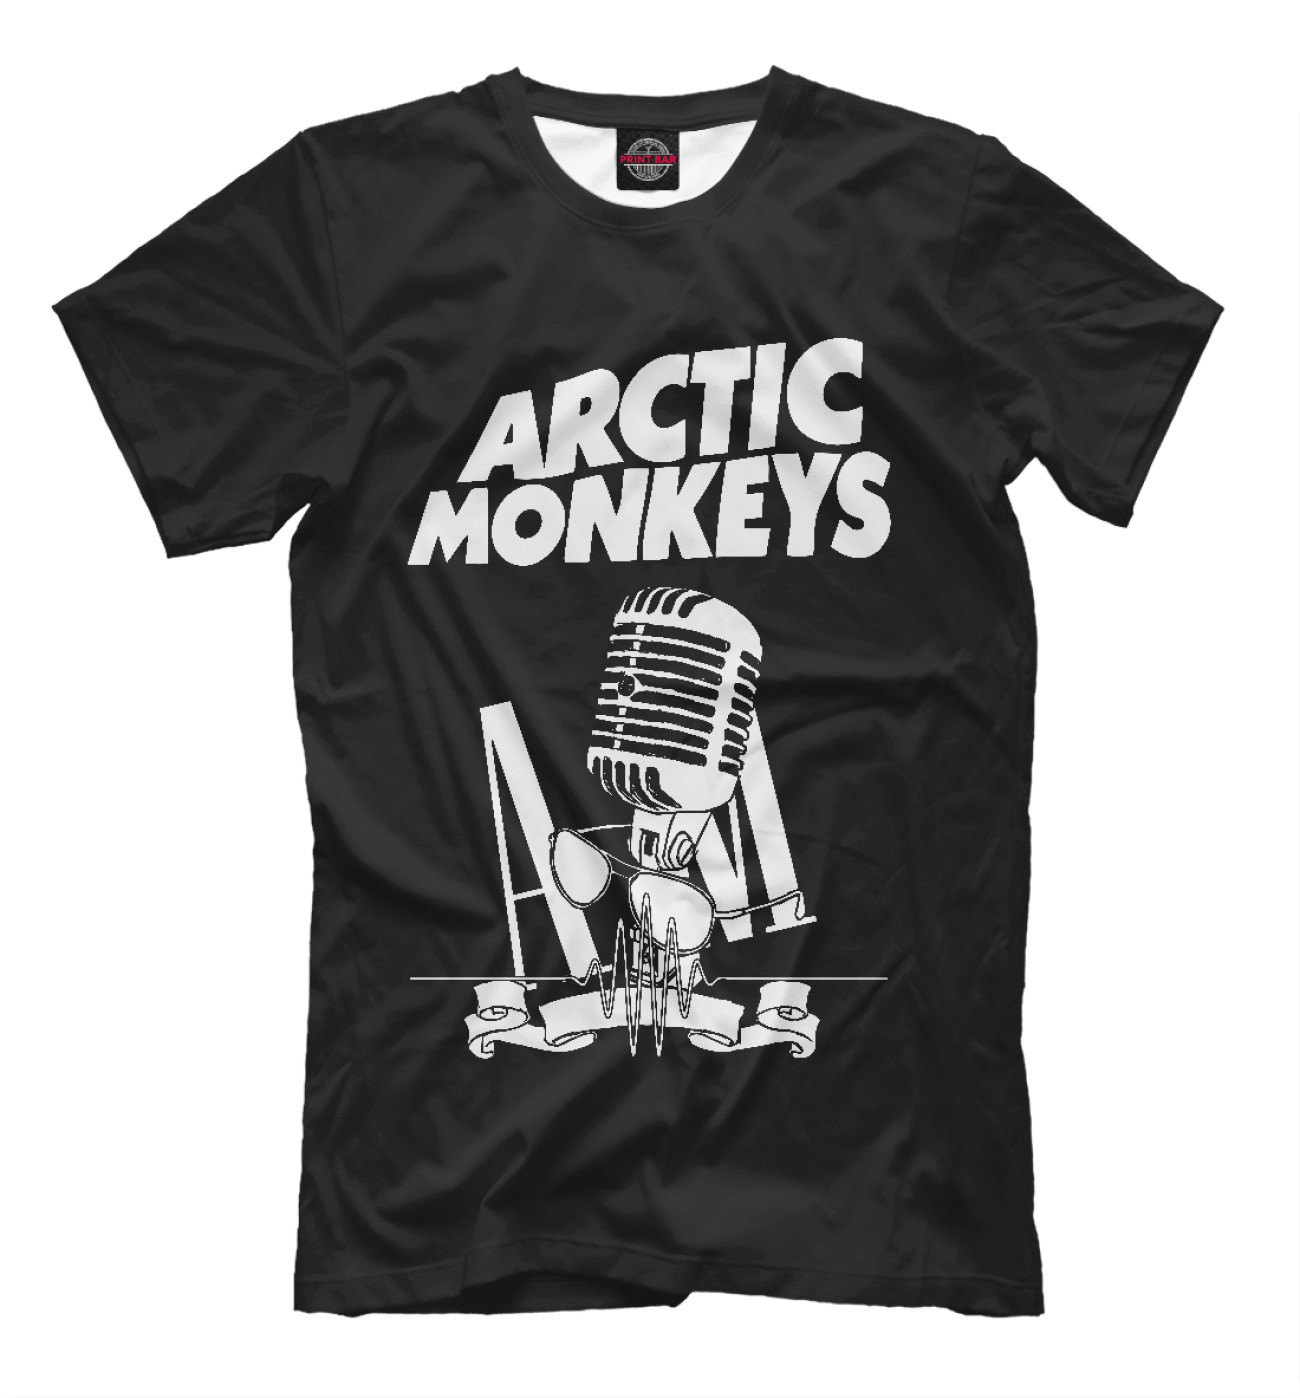 Мужская Футболка Arctic Monkeys, артикул: AMK-917653-fut-2